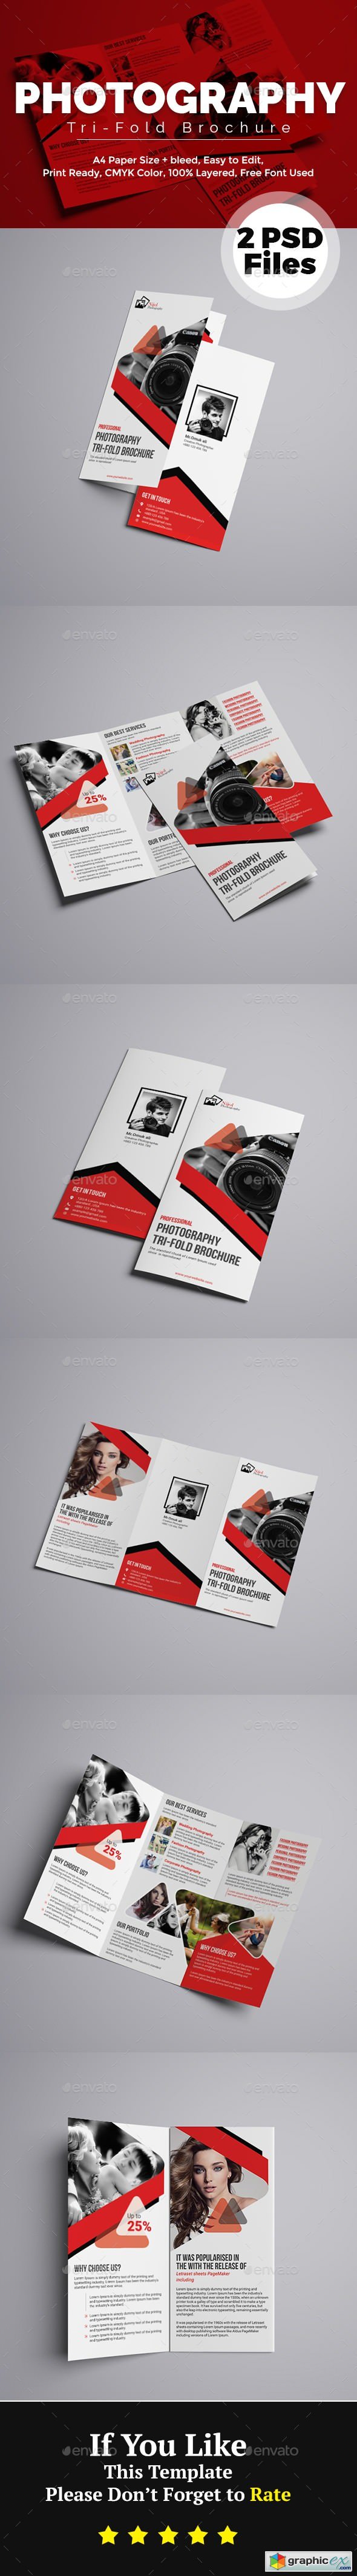 Photography Tri-Fold Brochure